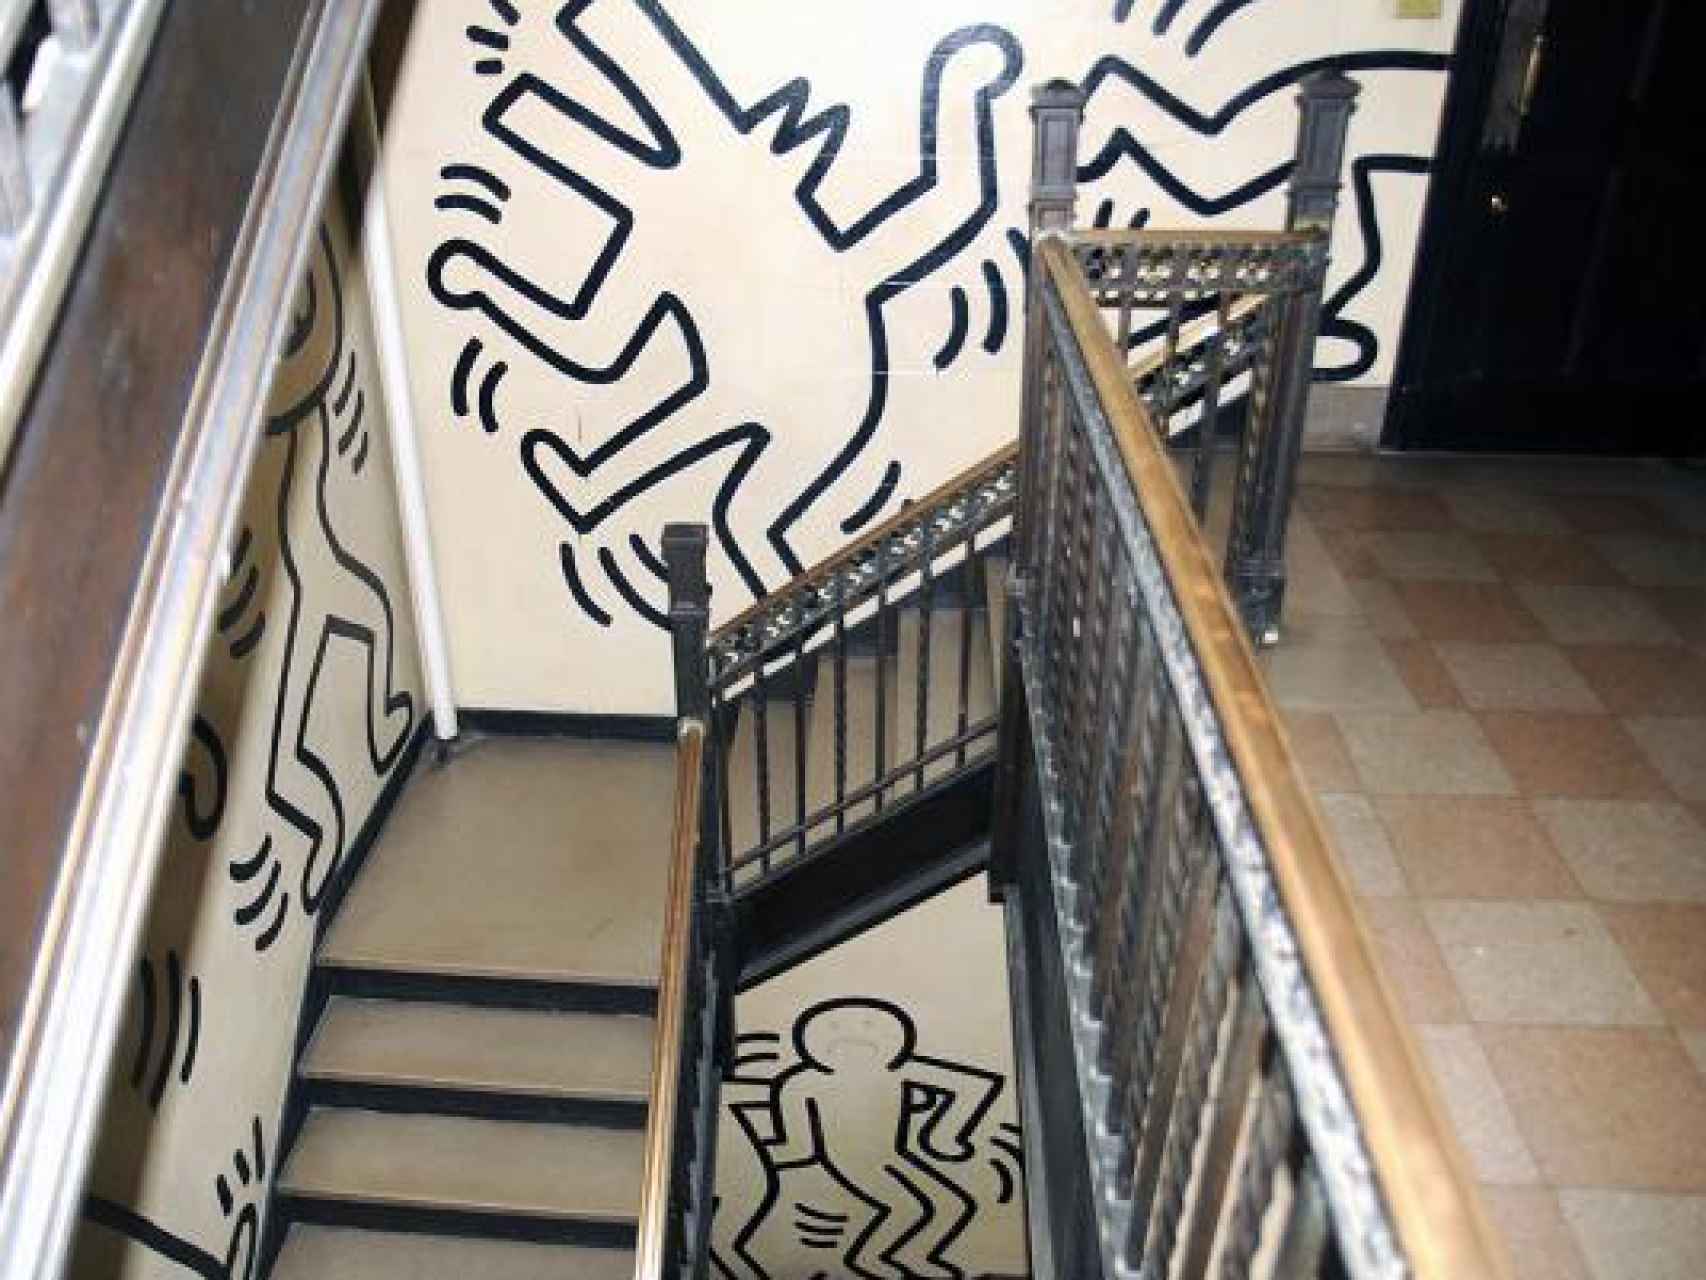 Parte del mural que Keith Haring pintó en los ochenta en Morningside Heights.